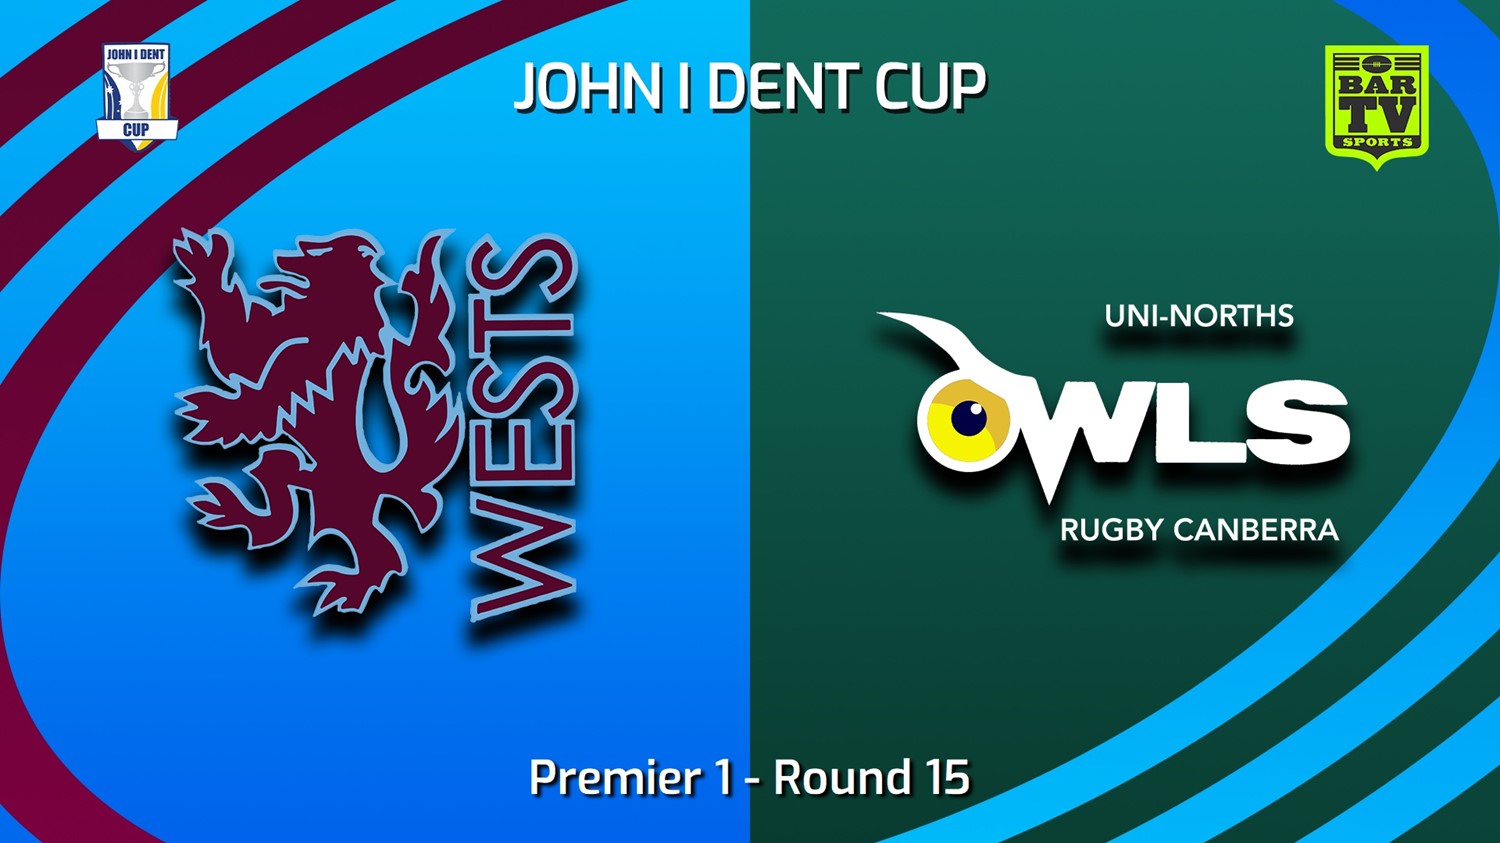 230722-John I Dent (ACT) Round 15 - Premier 1 - Wests Lions v UNI-North Owls Minigame Slate Image